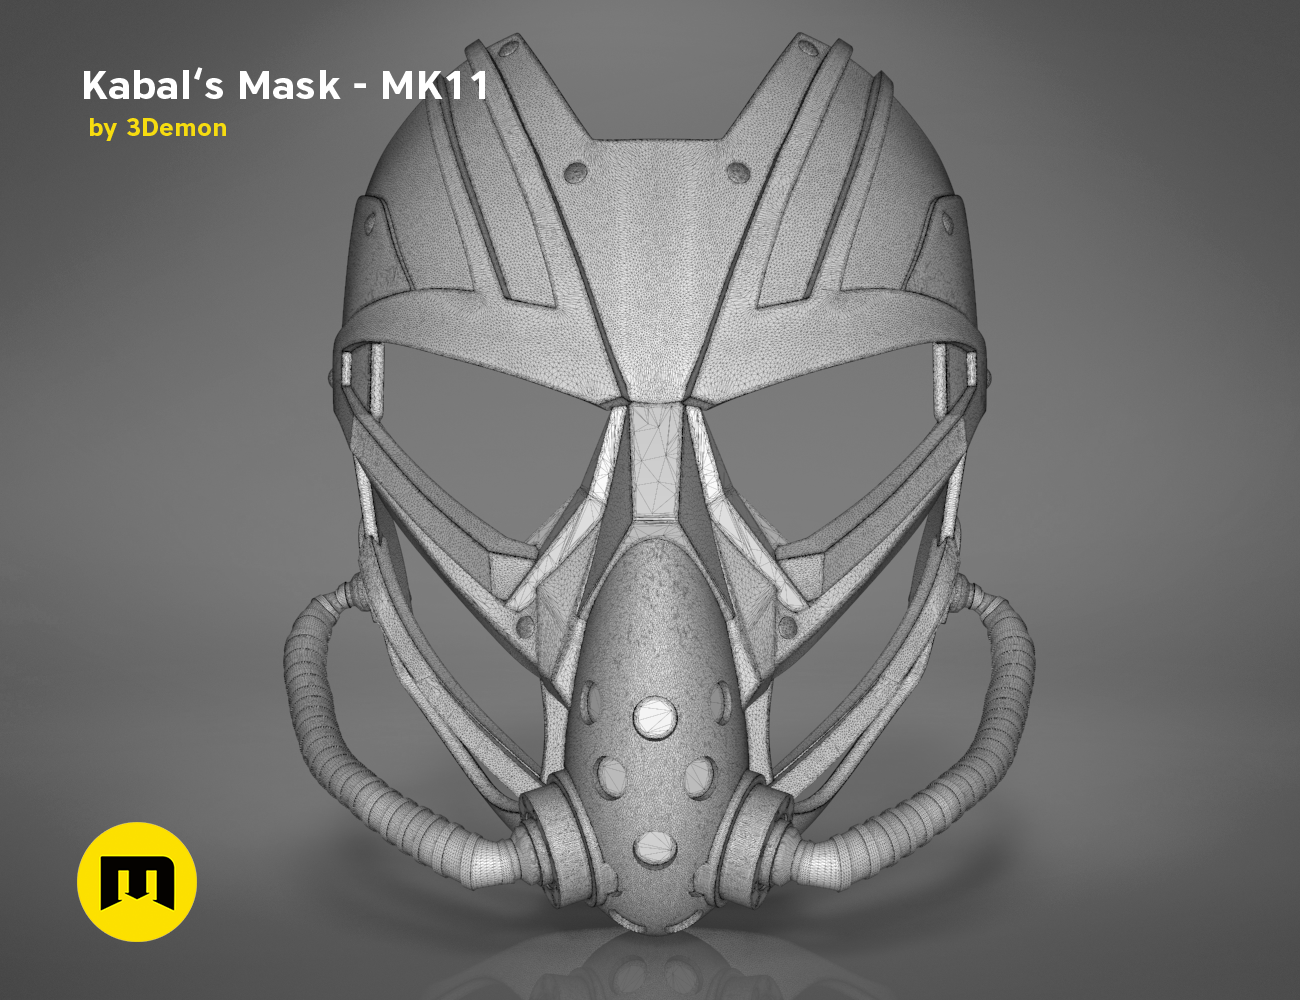 Pink Gas Mask – 6 underground – 3Demon - 3D print models download